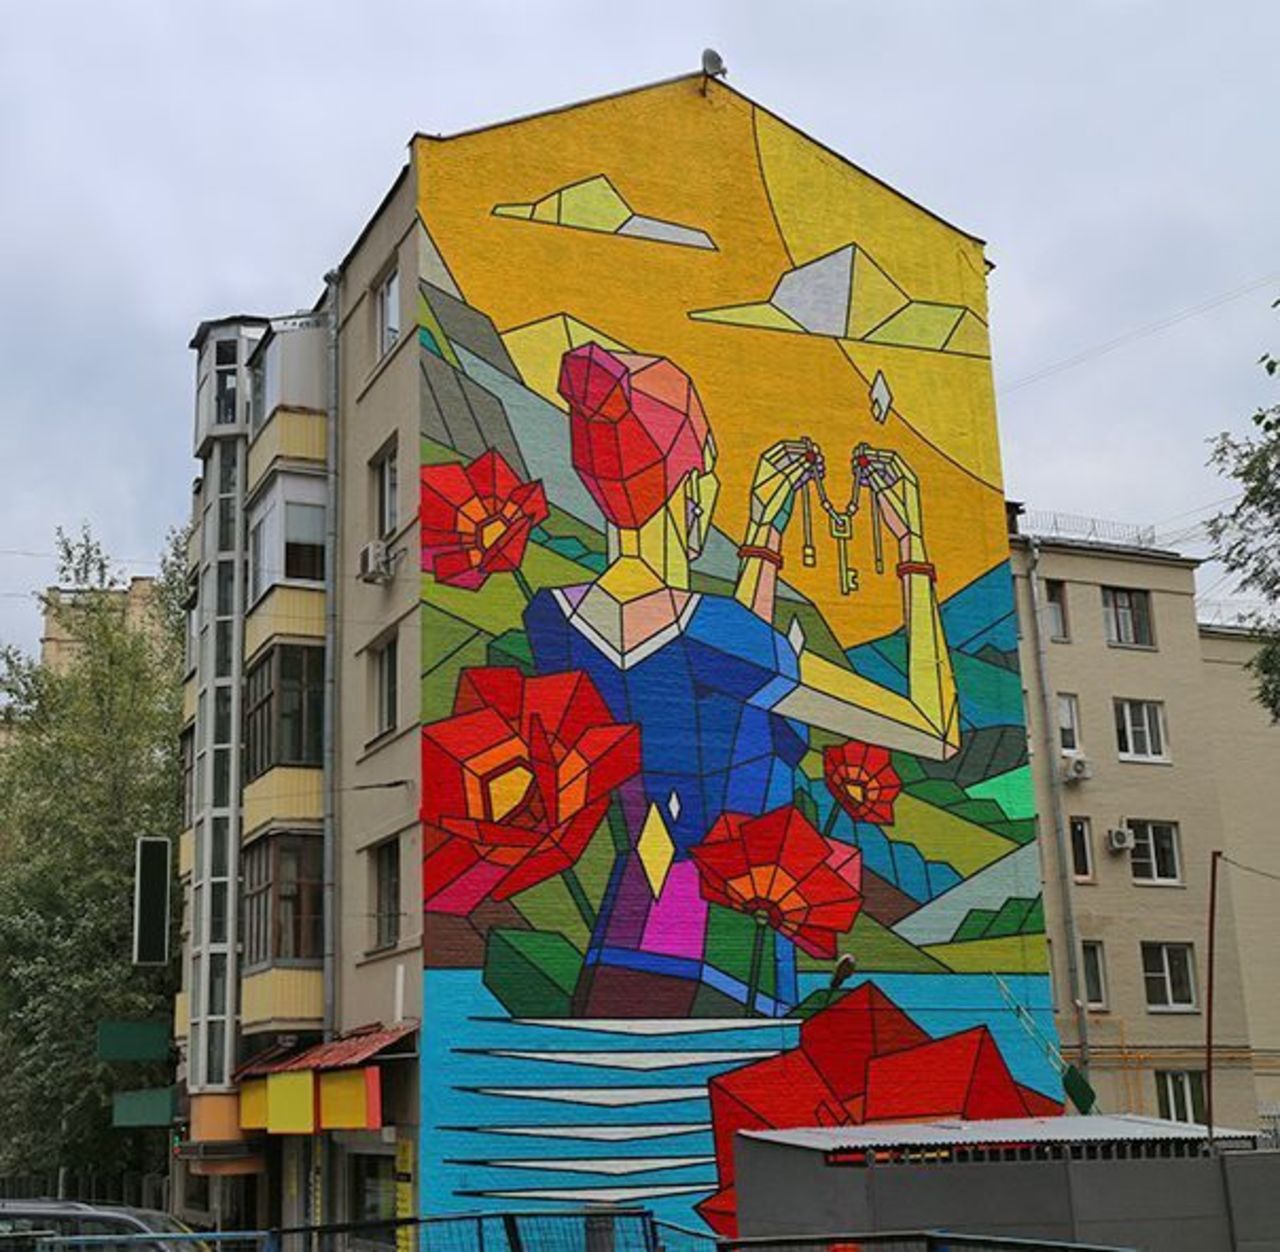 Aske#mural #streetart #art #graffiti https://t.co/wiSUA76Go2